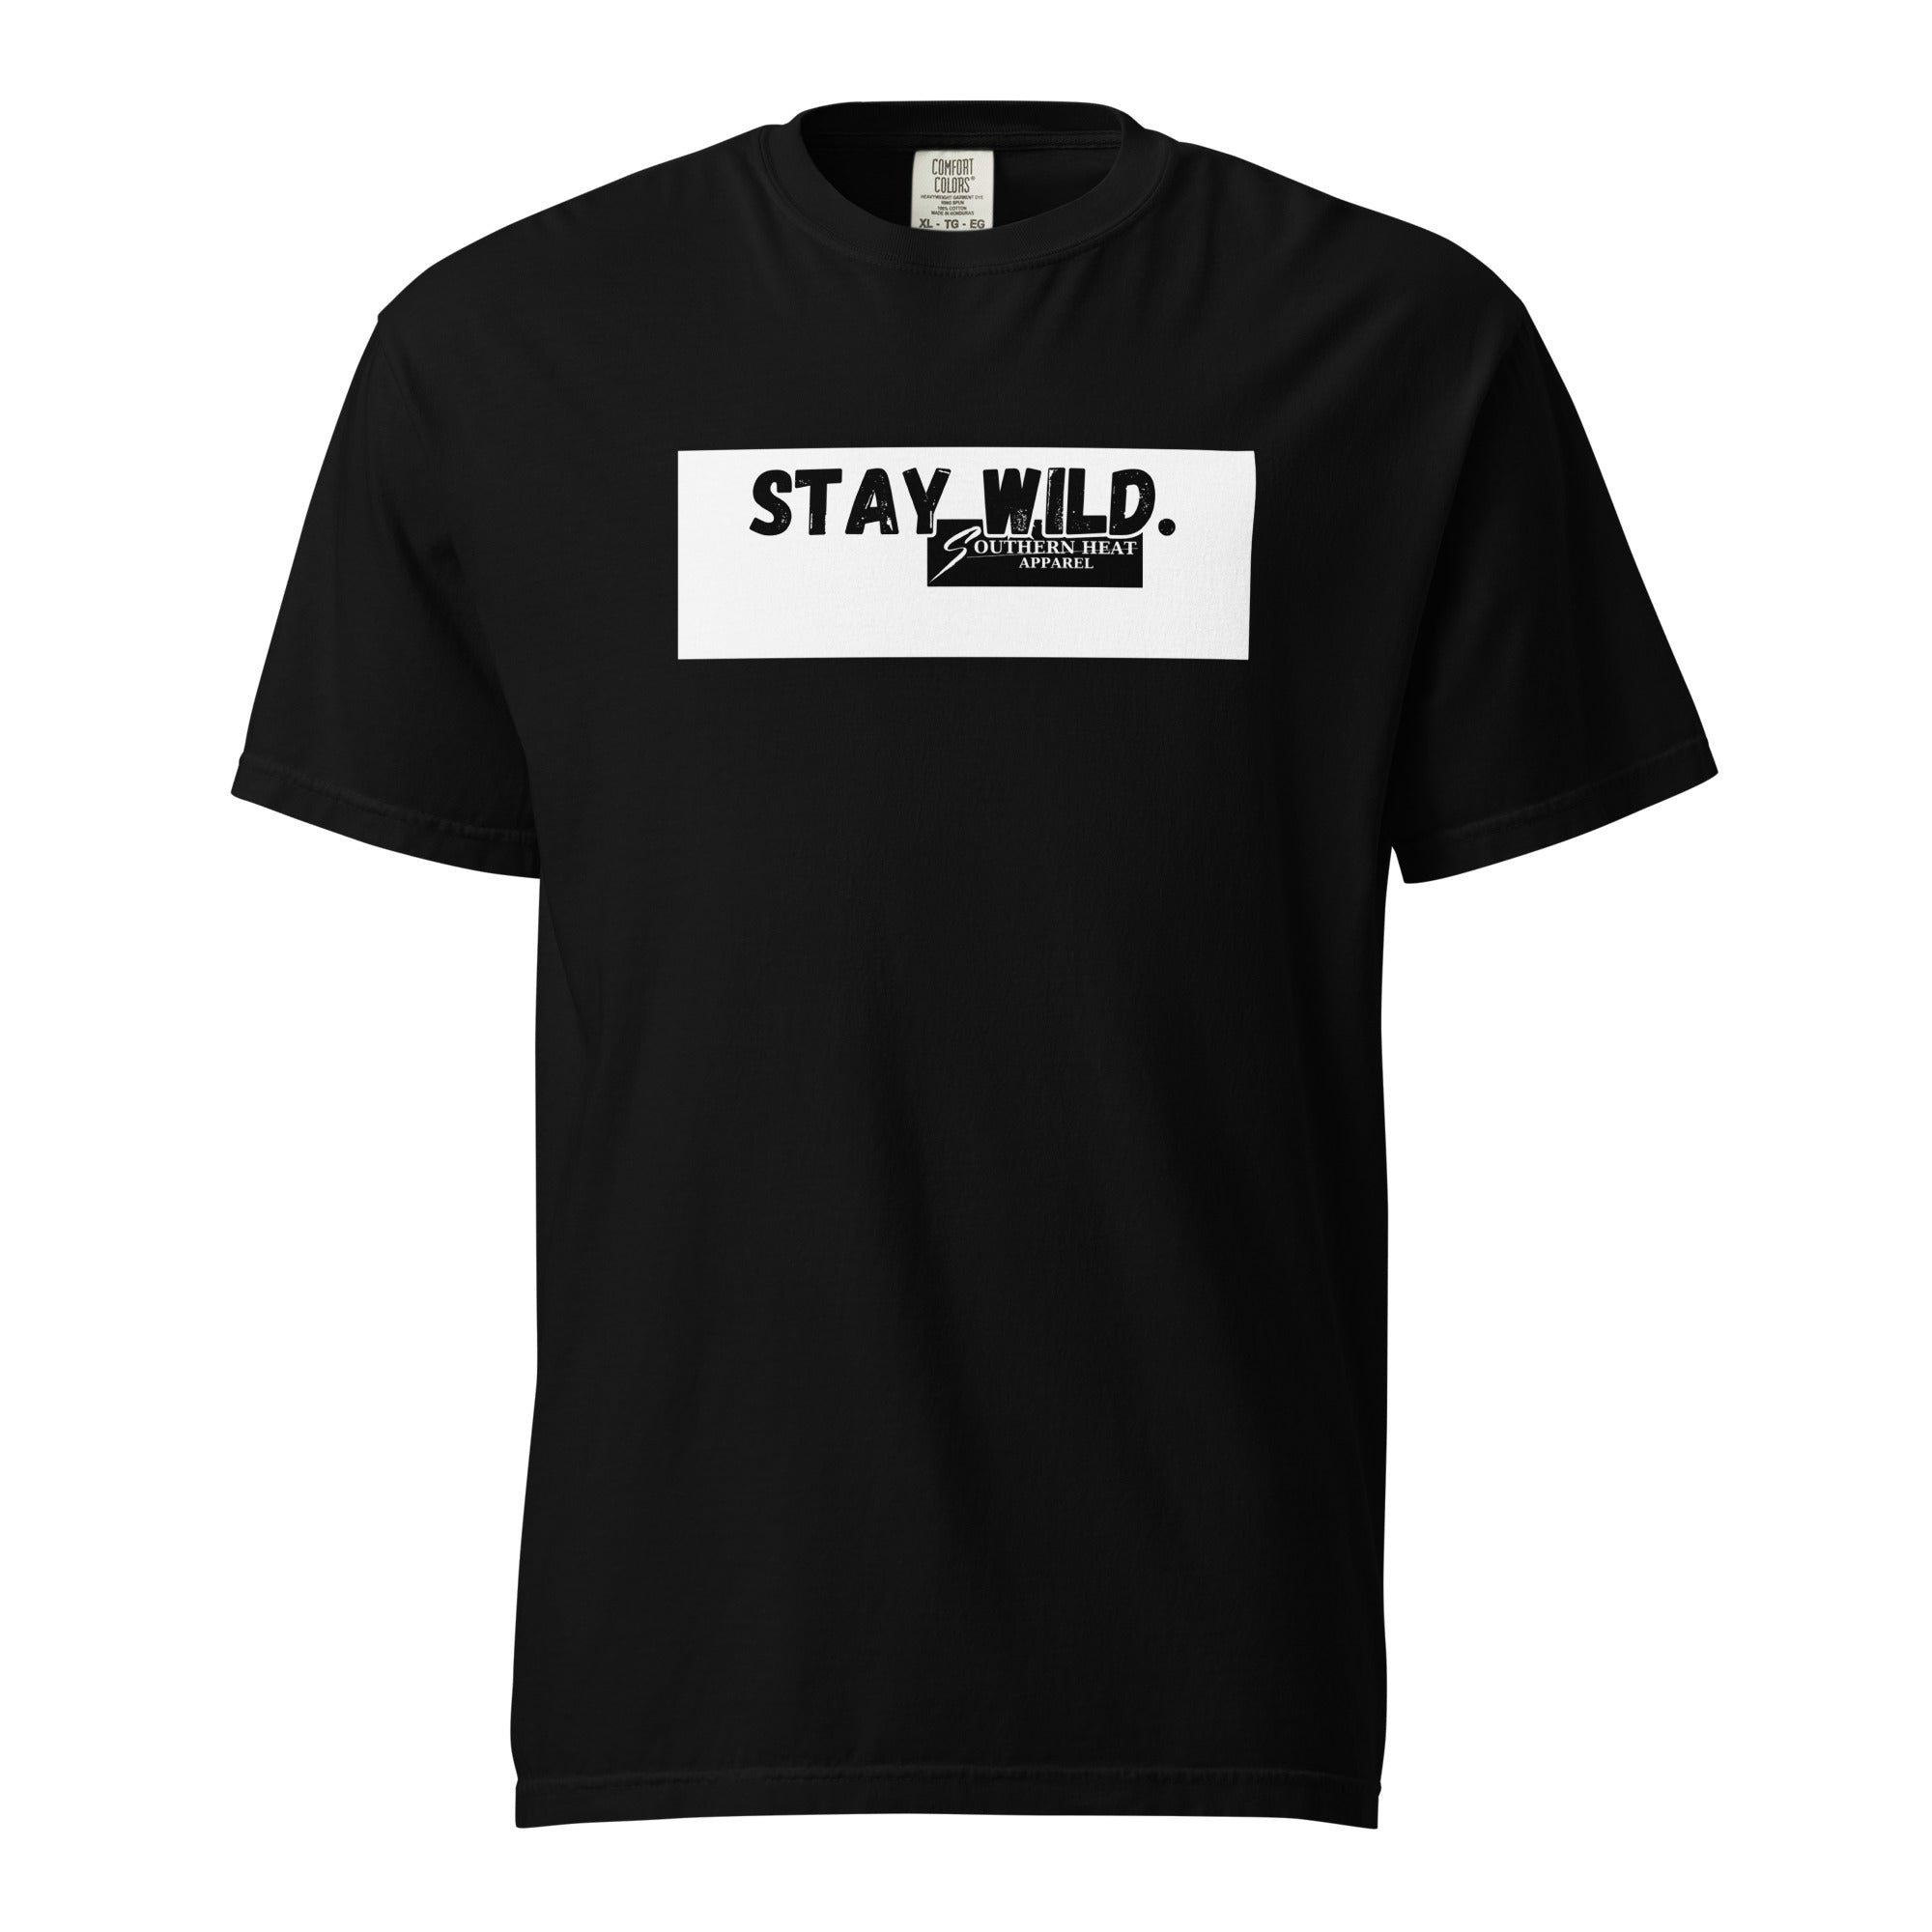 Stay wild- garment-dyed heavyweight t-shirt